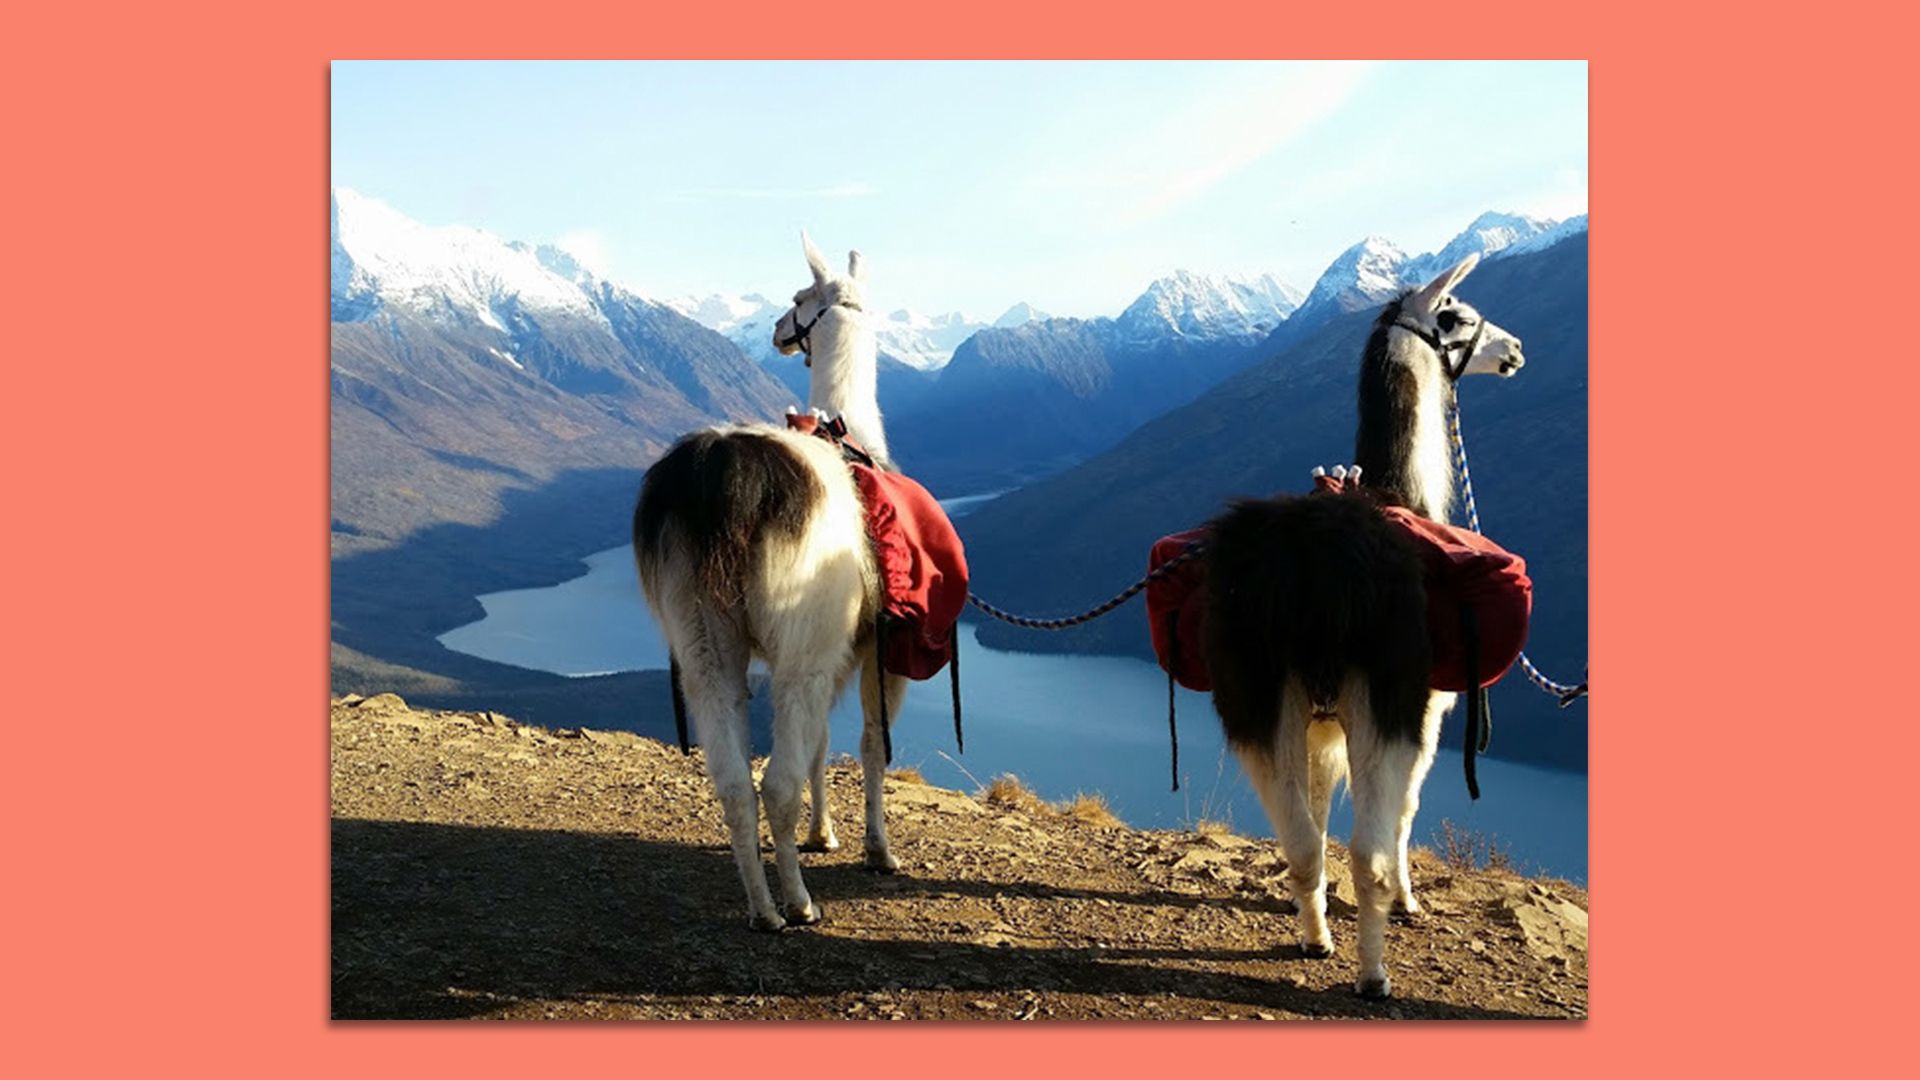 Two llamas carrying packs in Alaska.